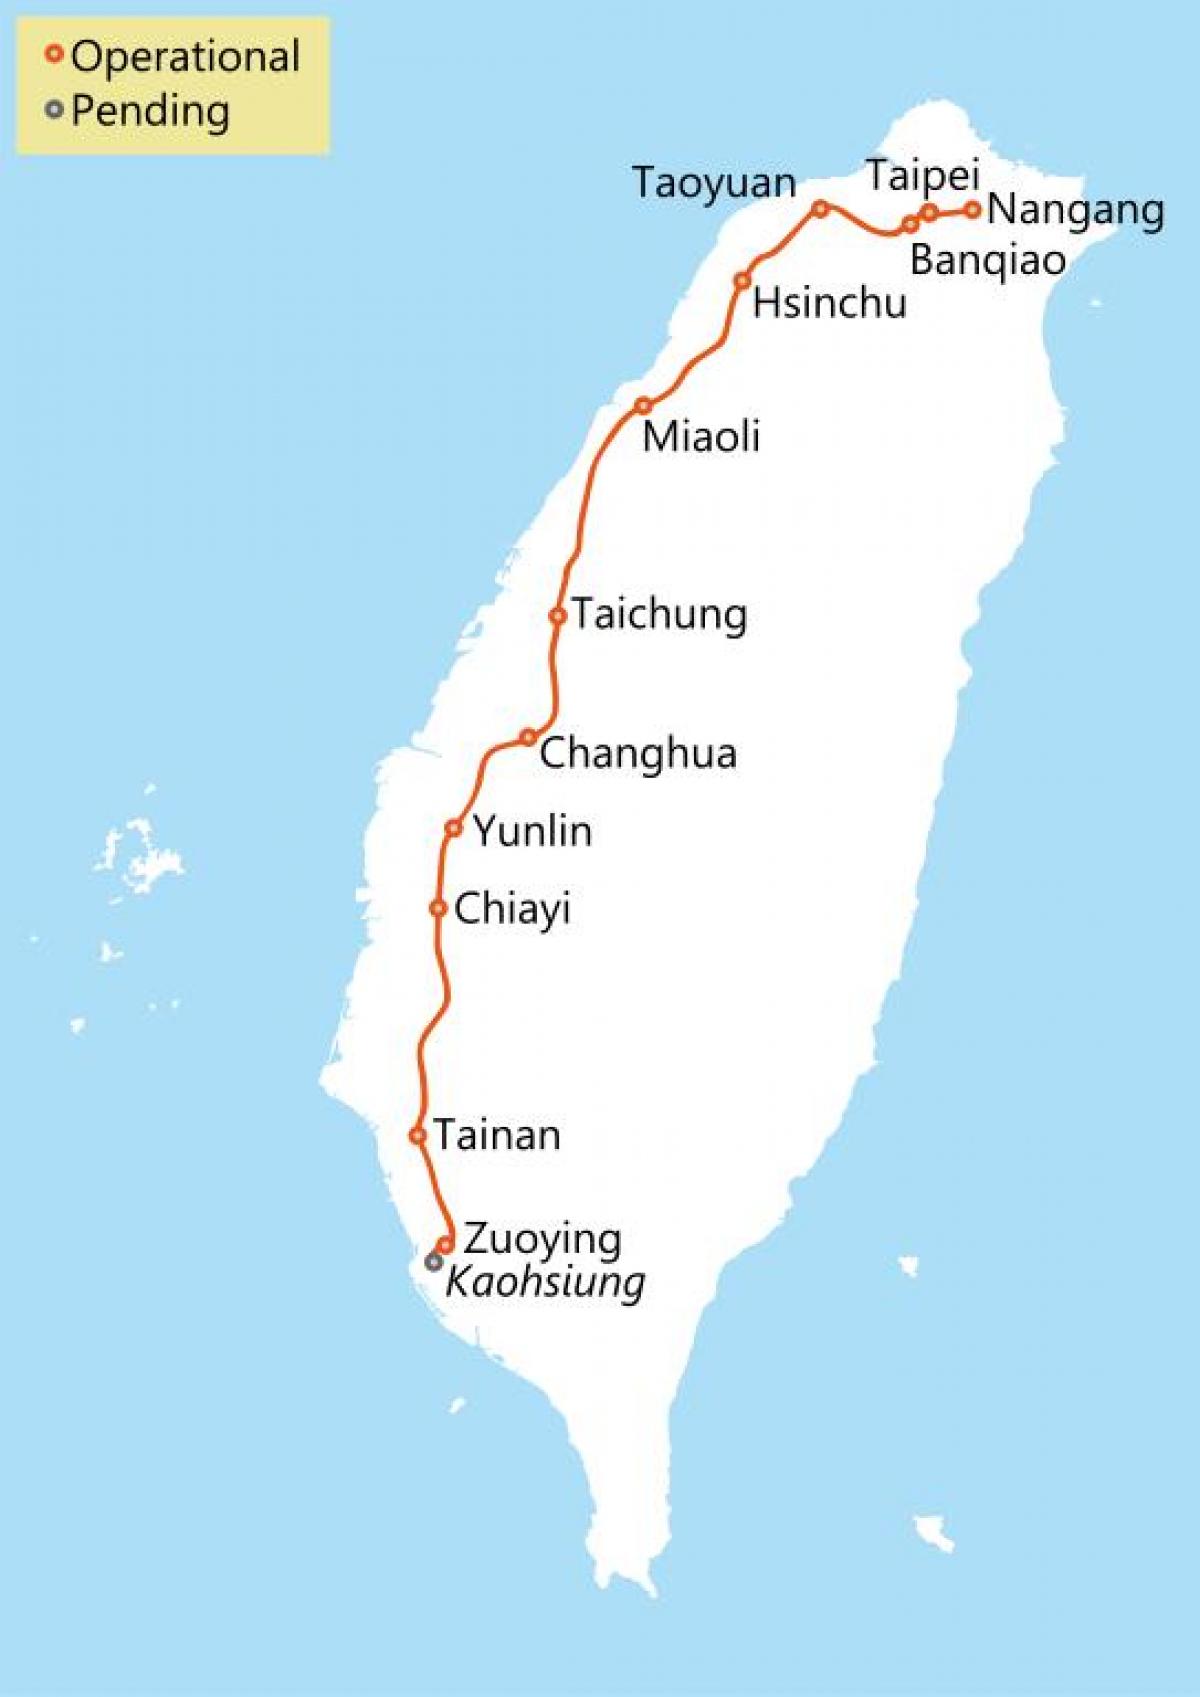 Taiwan abiadura handiko trenbide ibilbidea mapa